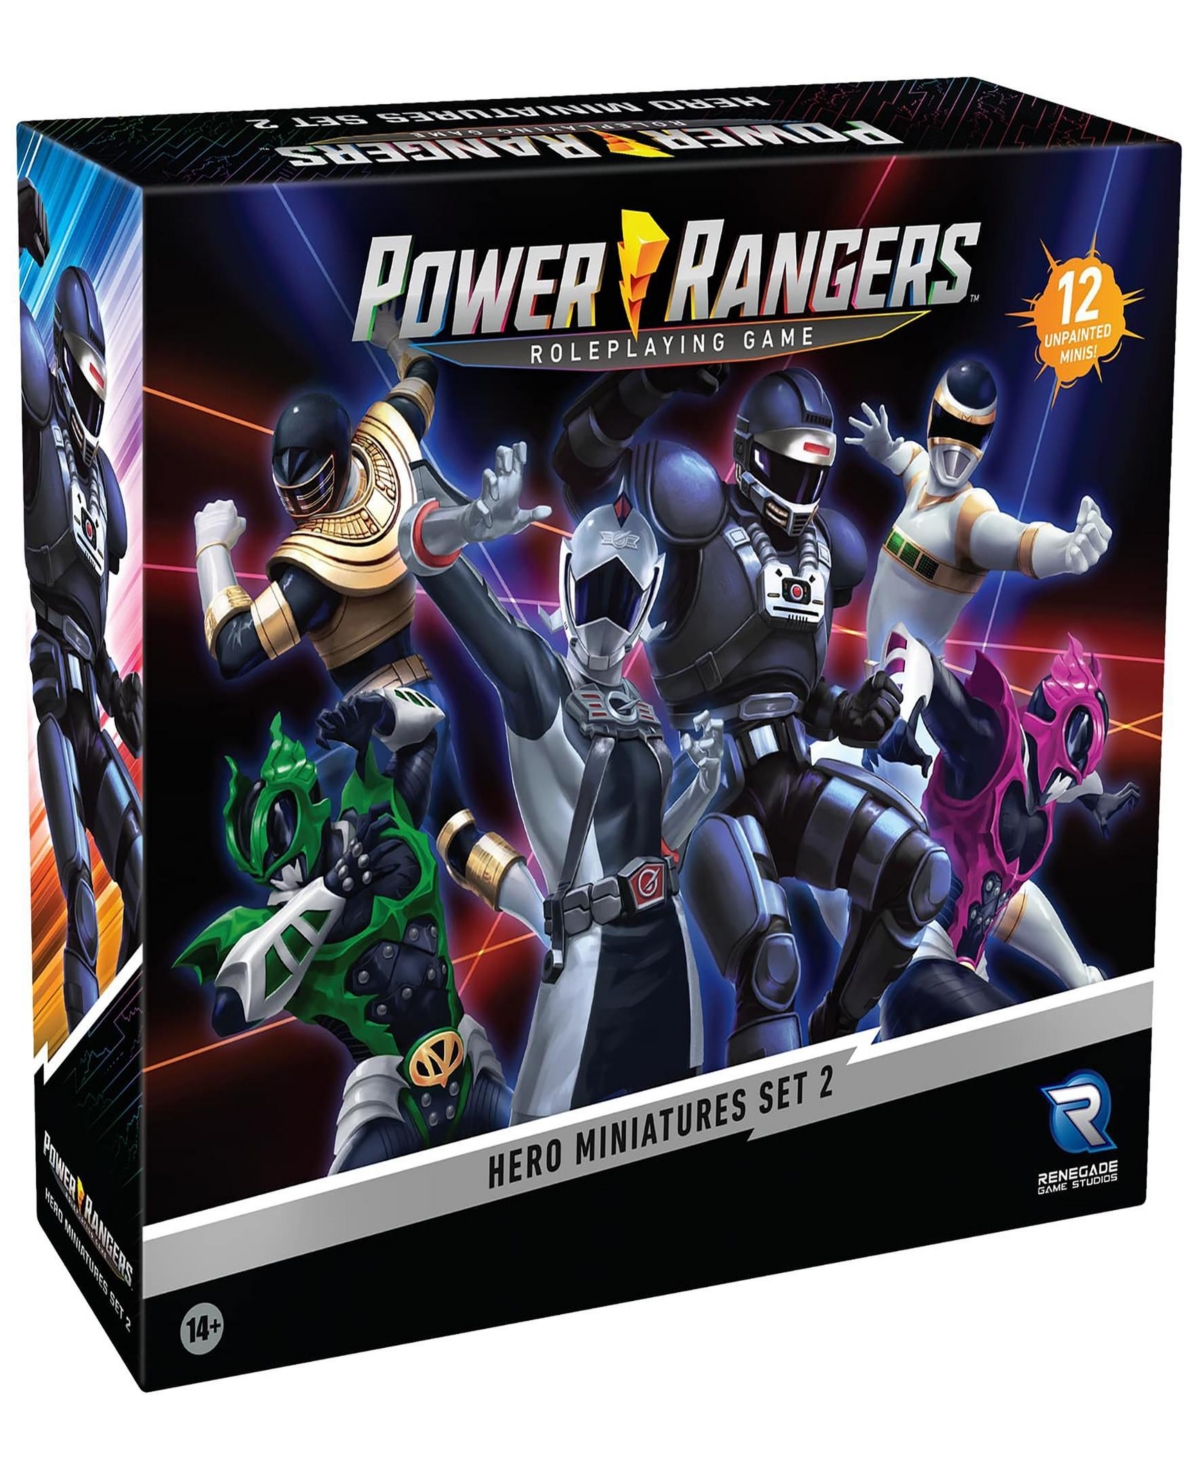 Renegade Game Studios - Power Rangers Roleplaying Game Hero Miniatures Set 2 In Multi